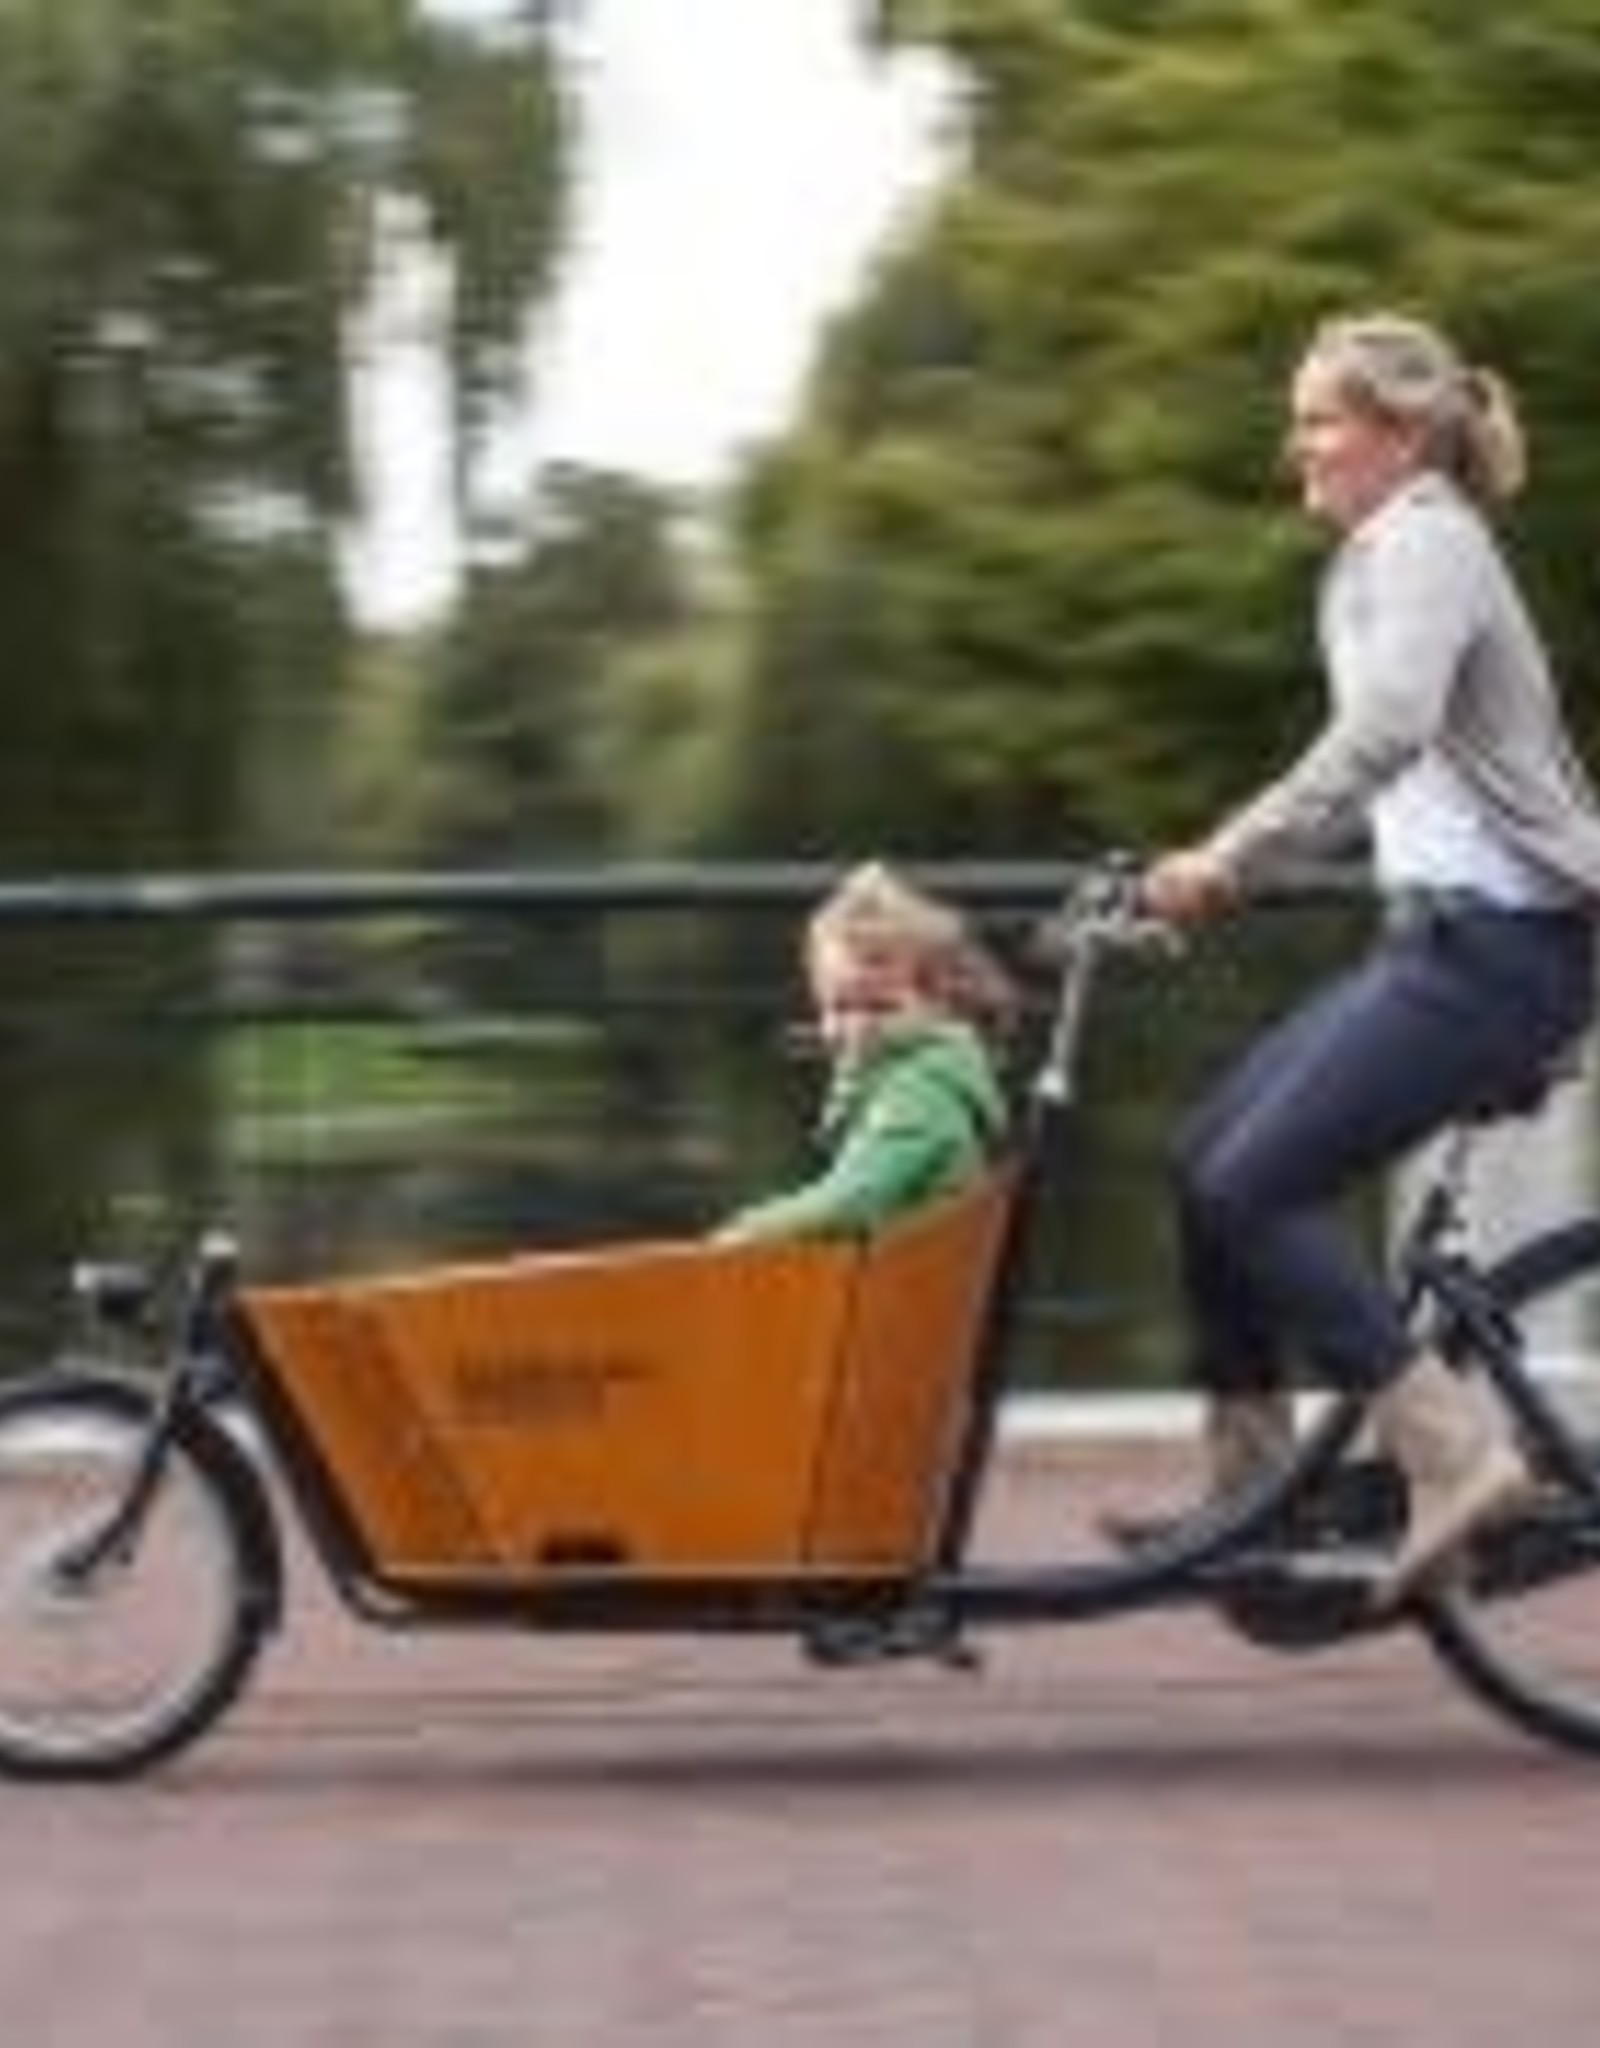 family cargo bike